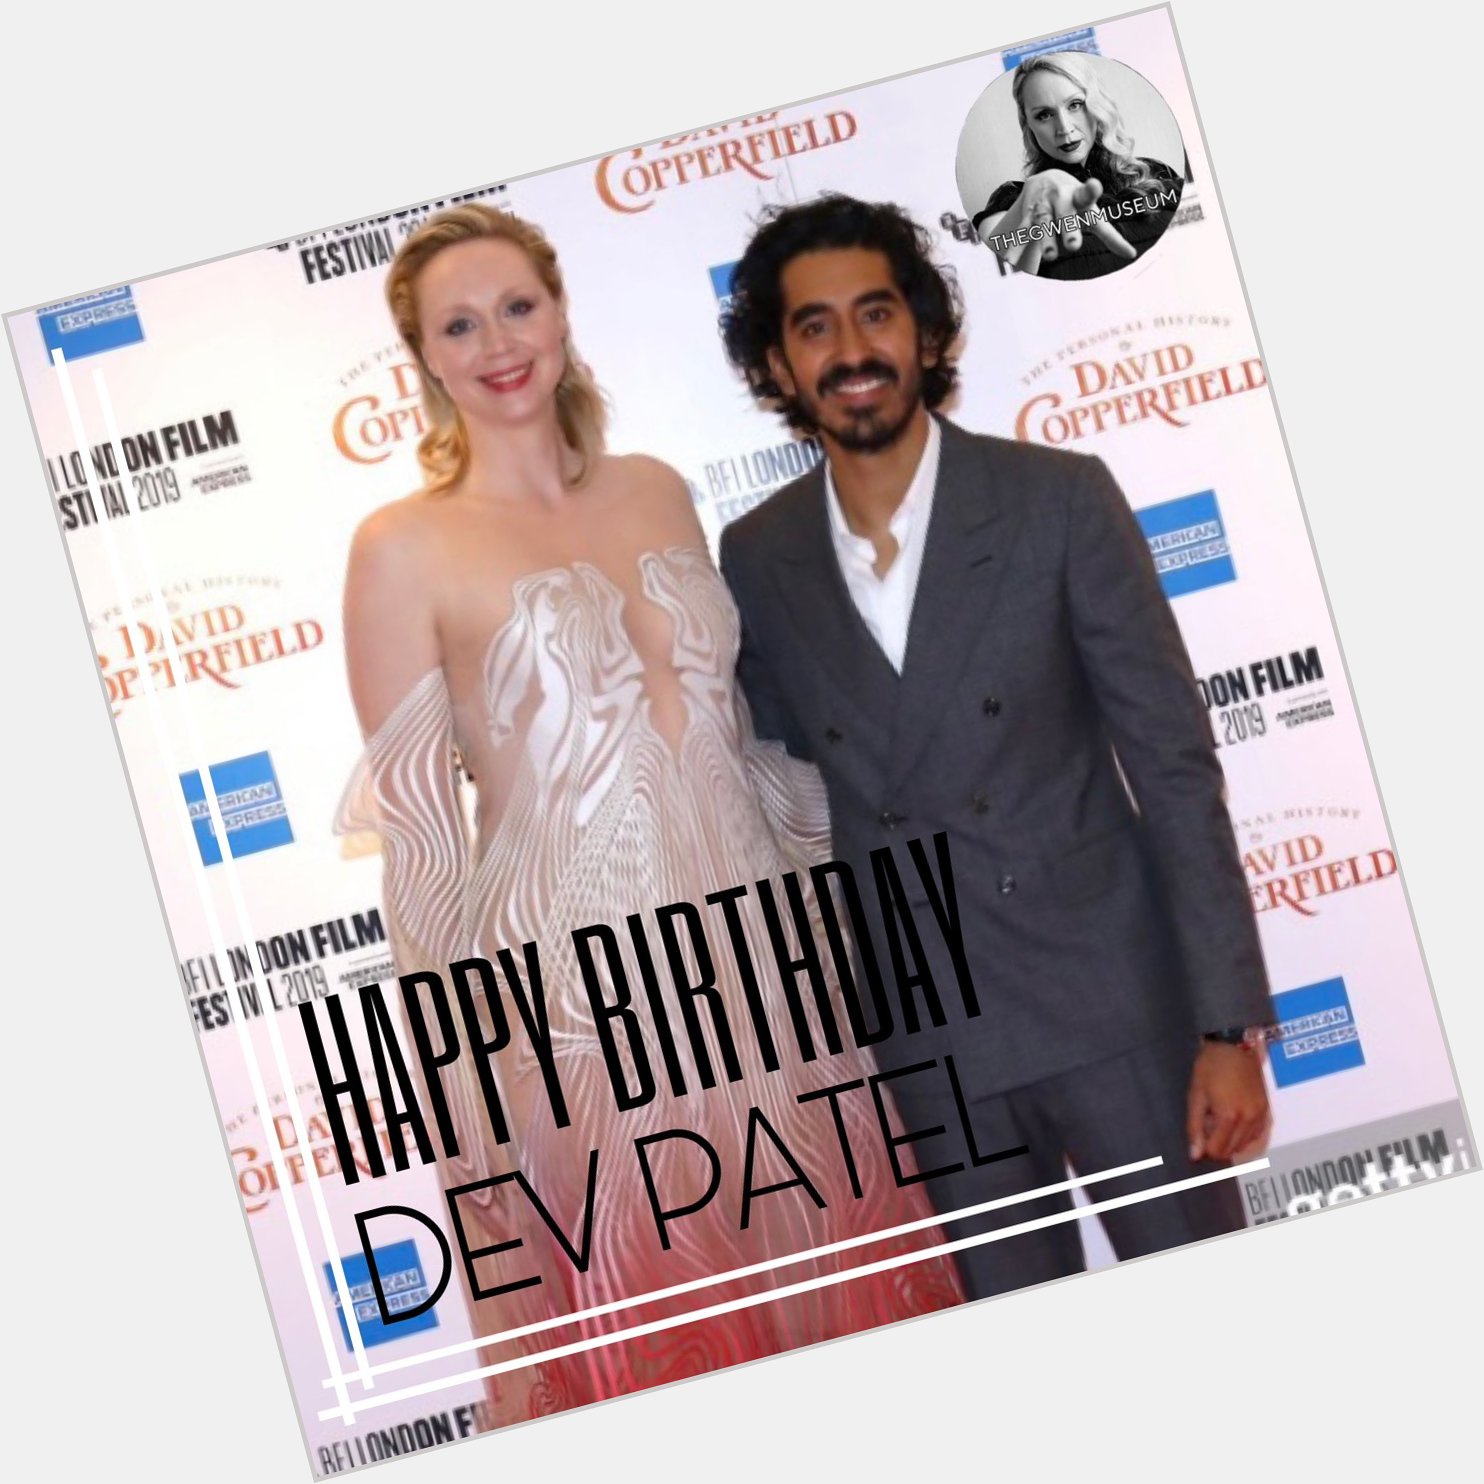 Happy birthday to Gwen s Copperfield co-star, Dev Patel! 